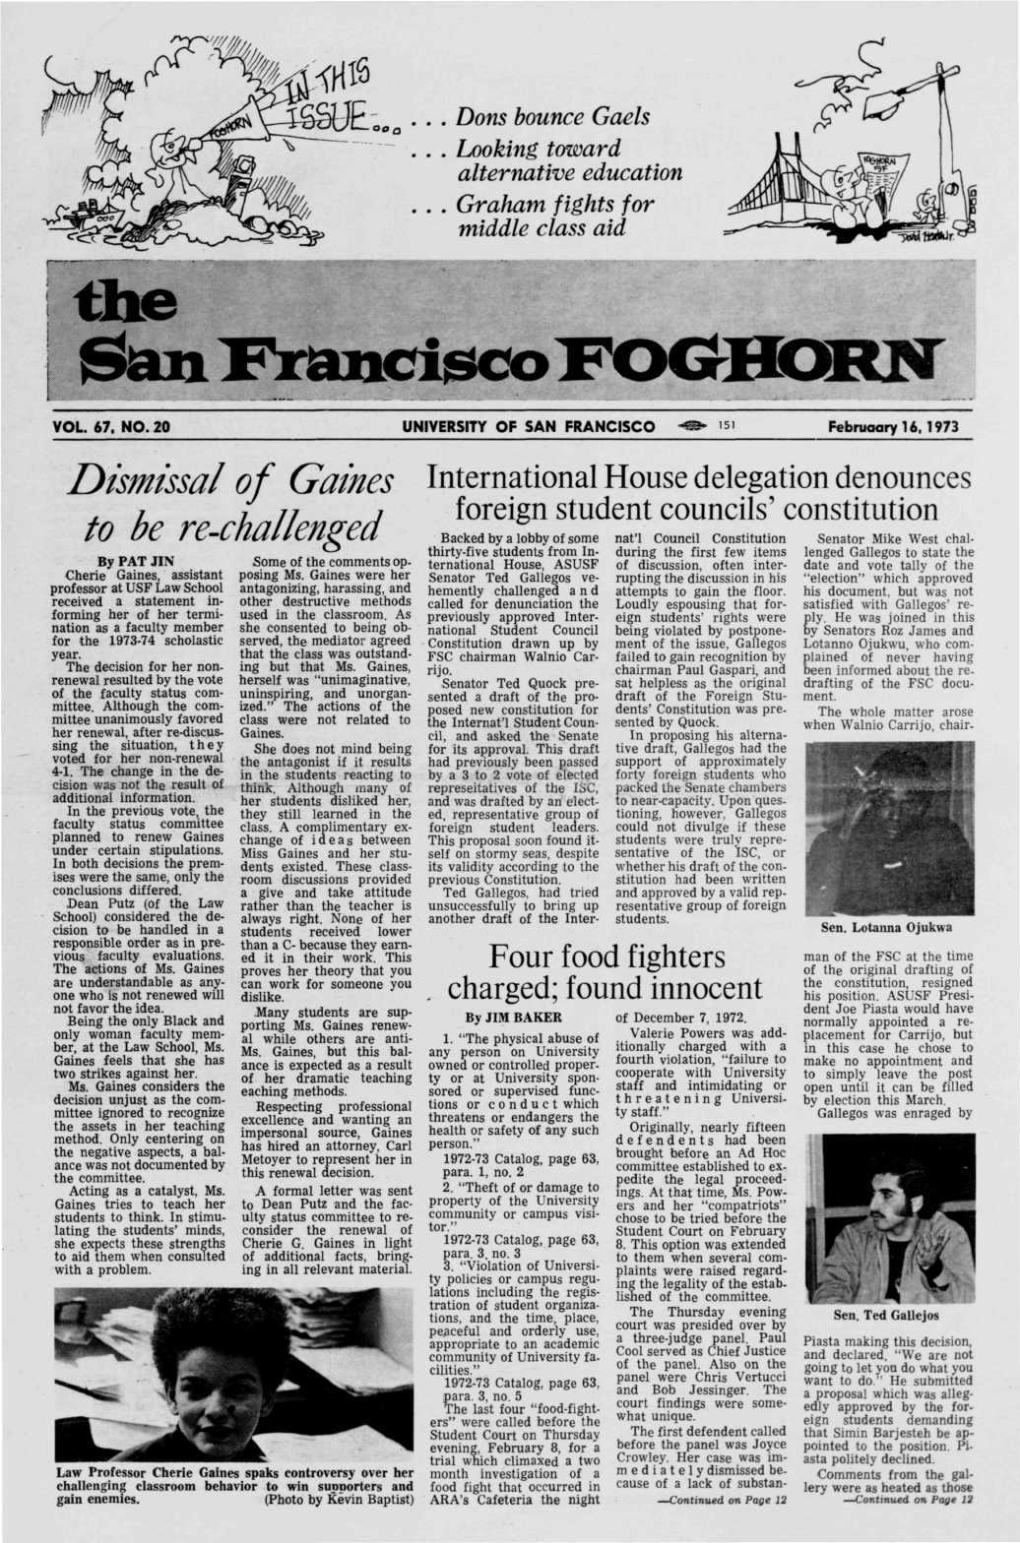 The Sfein Francisco FOGHORN